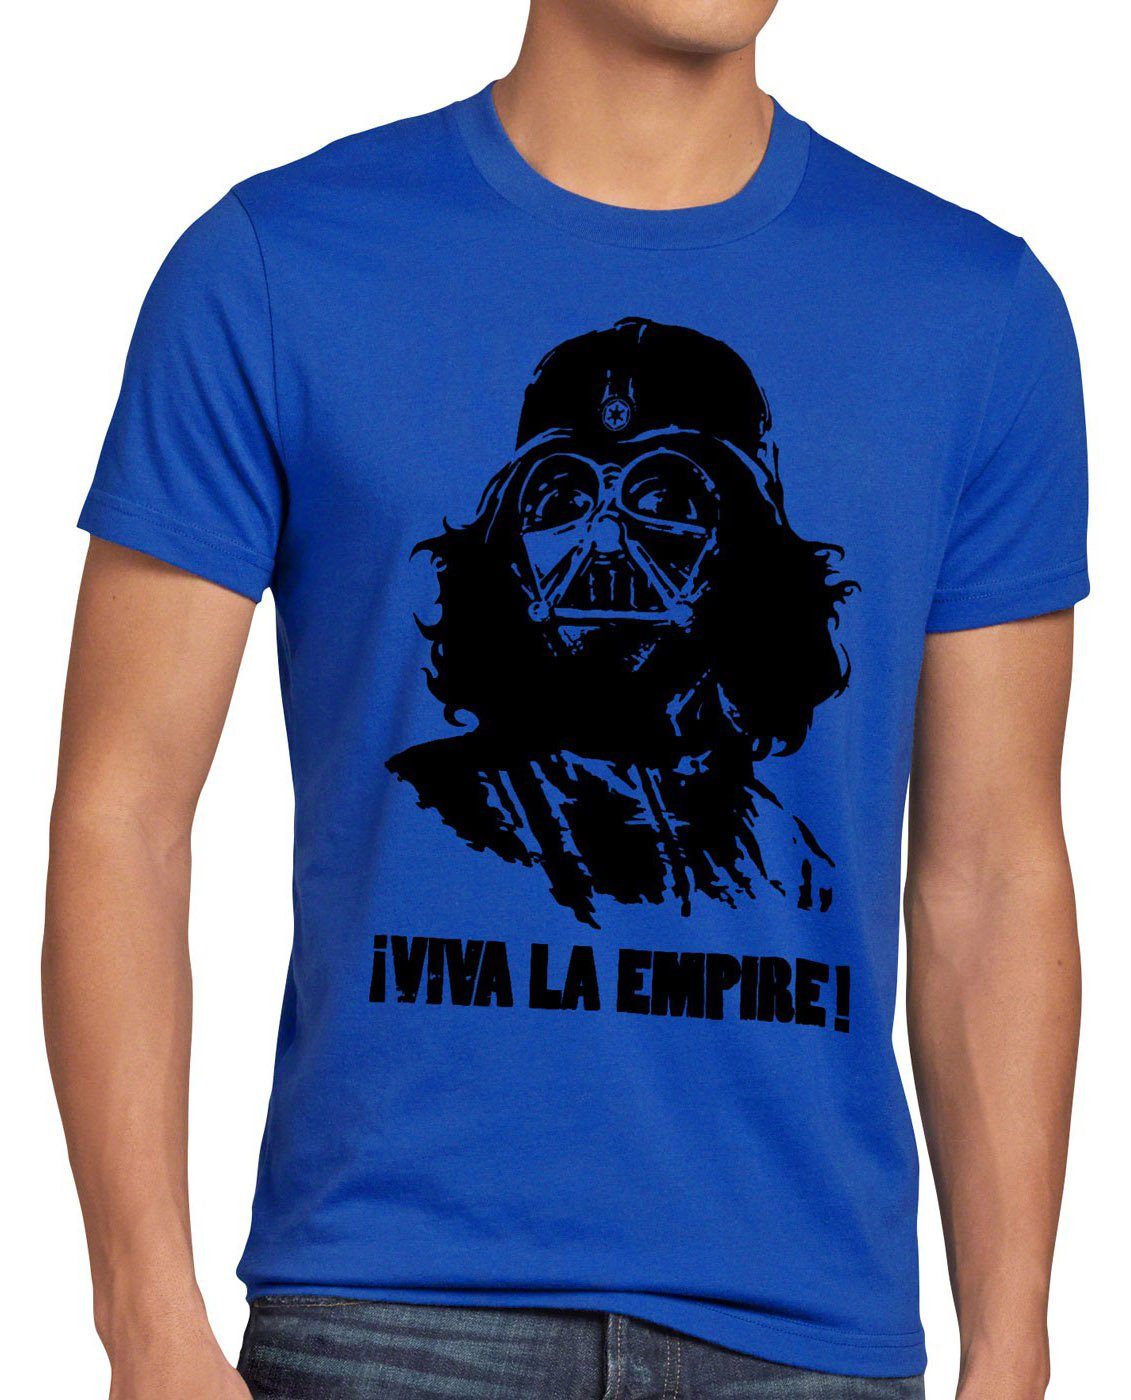 style3 Print-Shirt Herren revolution Imperium vader kuba wars che weiß T-Shirt star guevara Viva darth